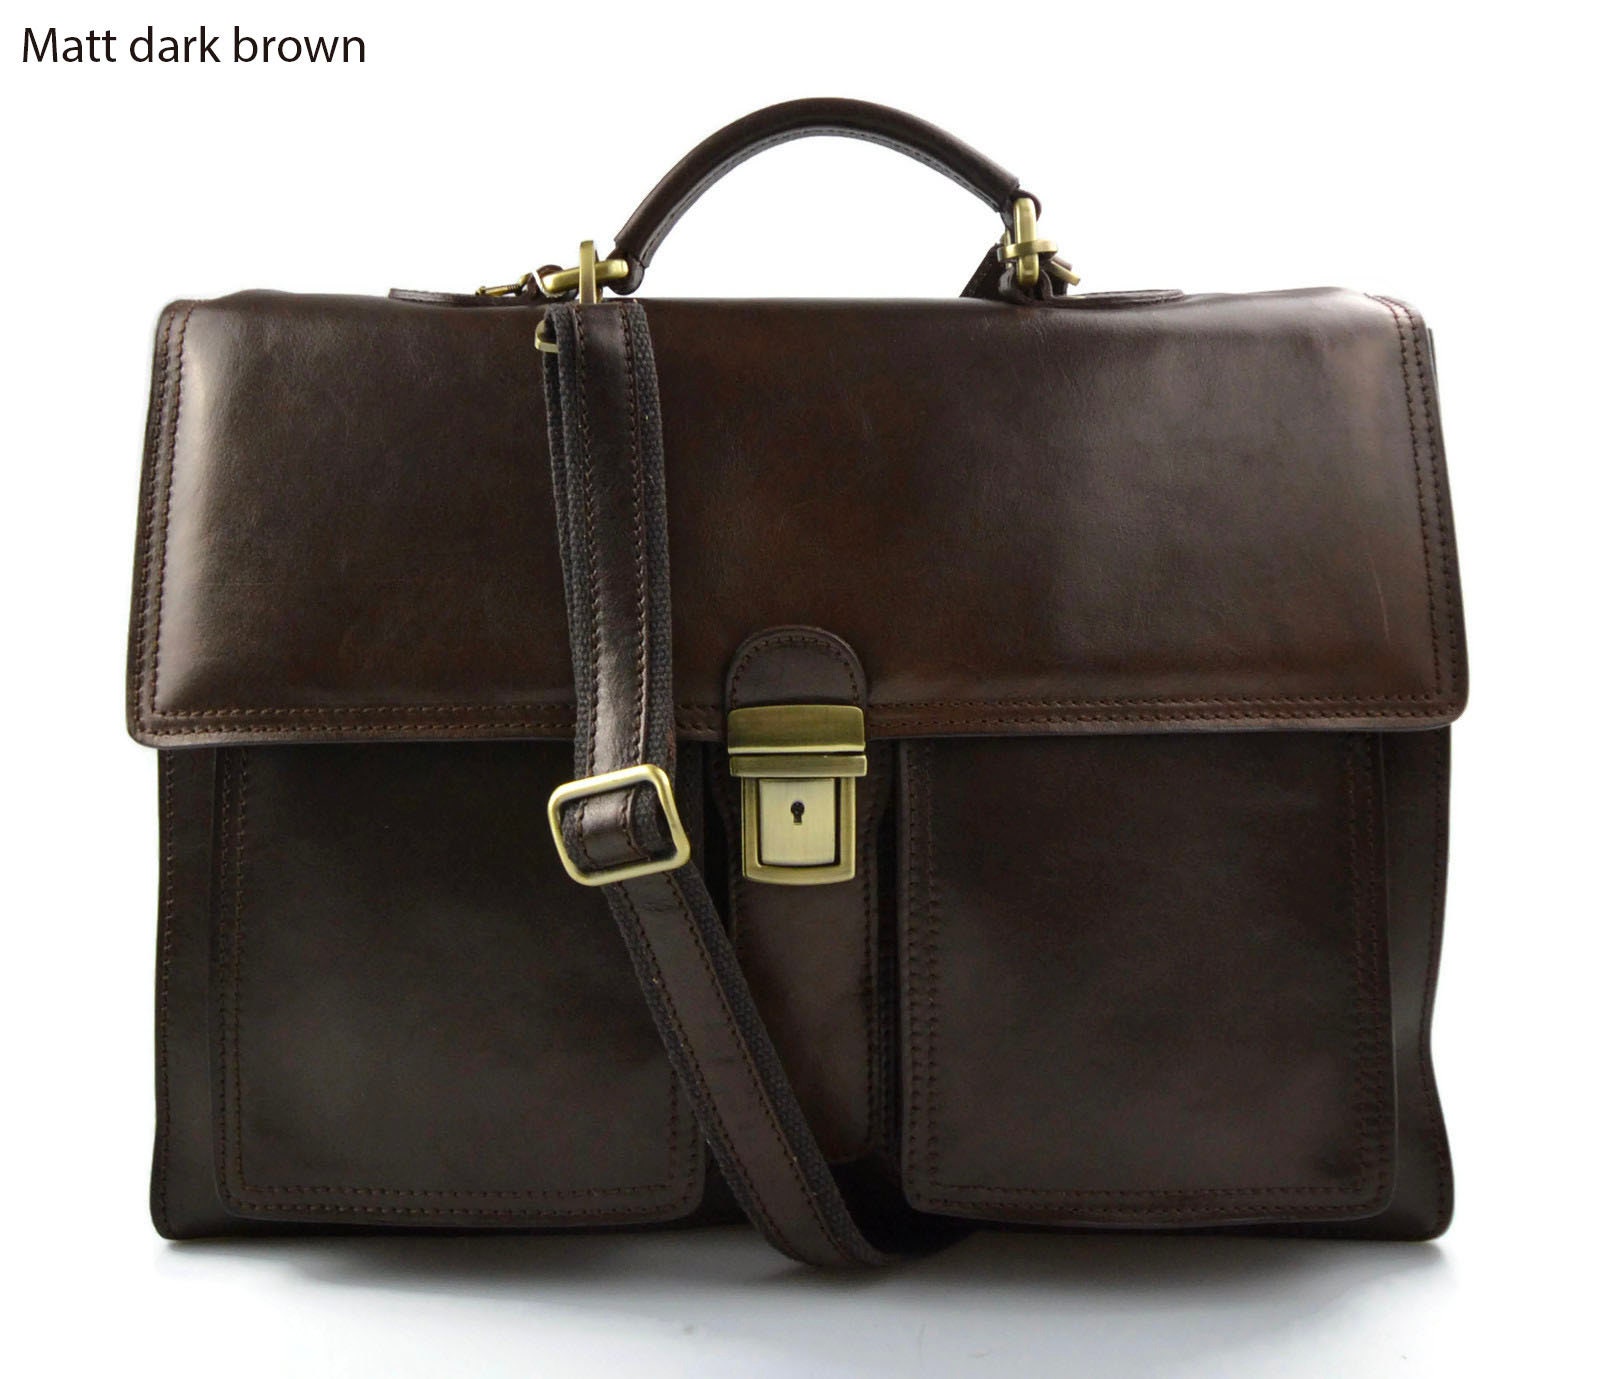 Leather briefcase business bag conference bag satchel office | Etsy